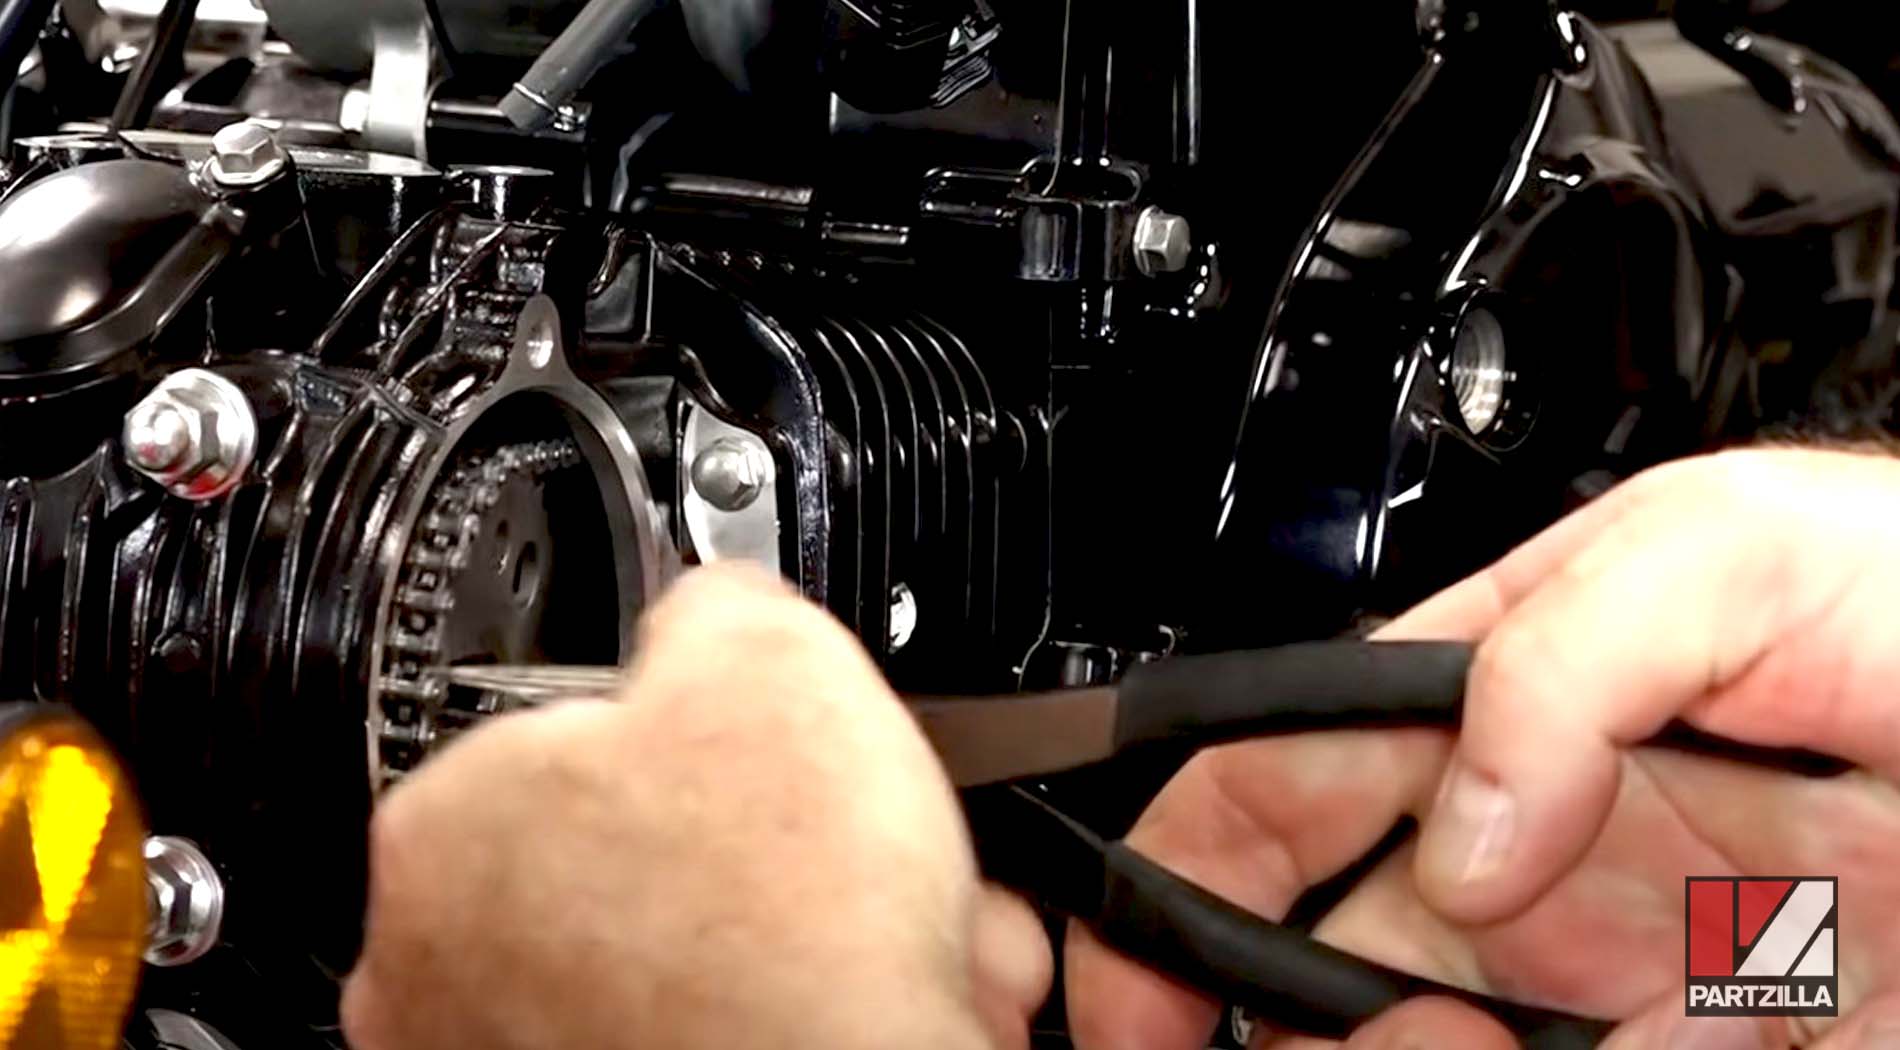 Honda Grom engine rebuild cylinder head